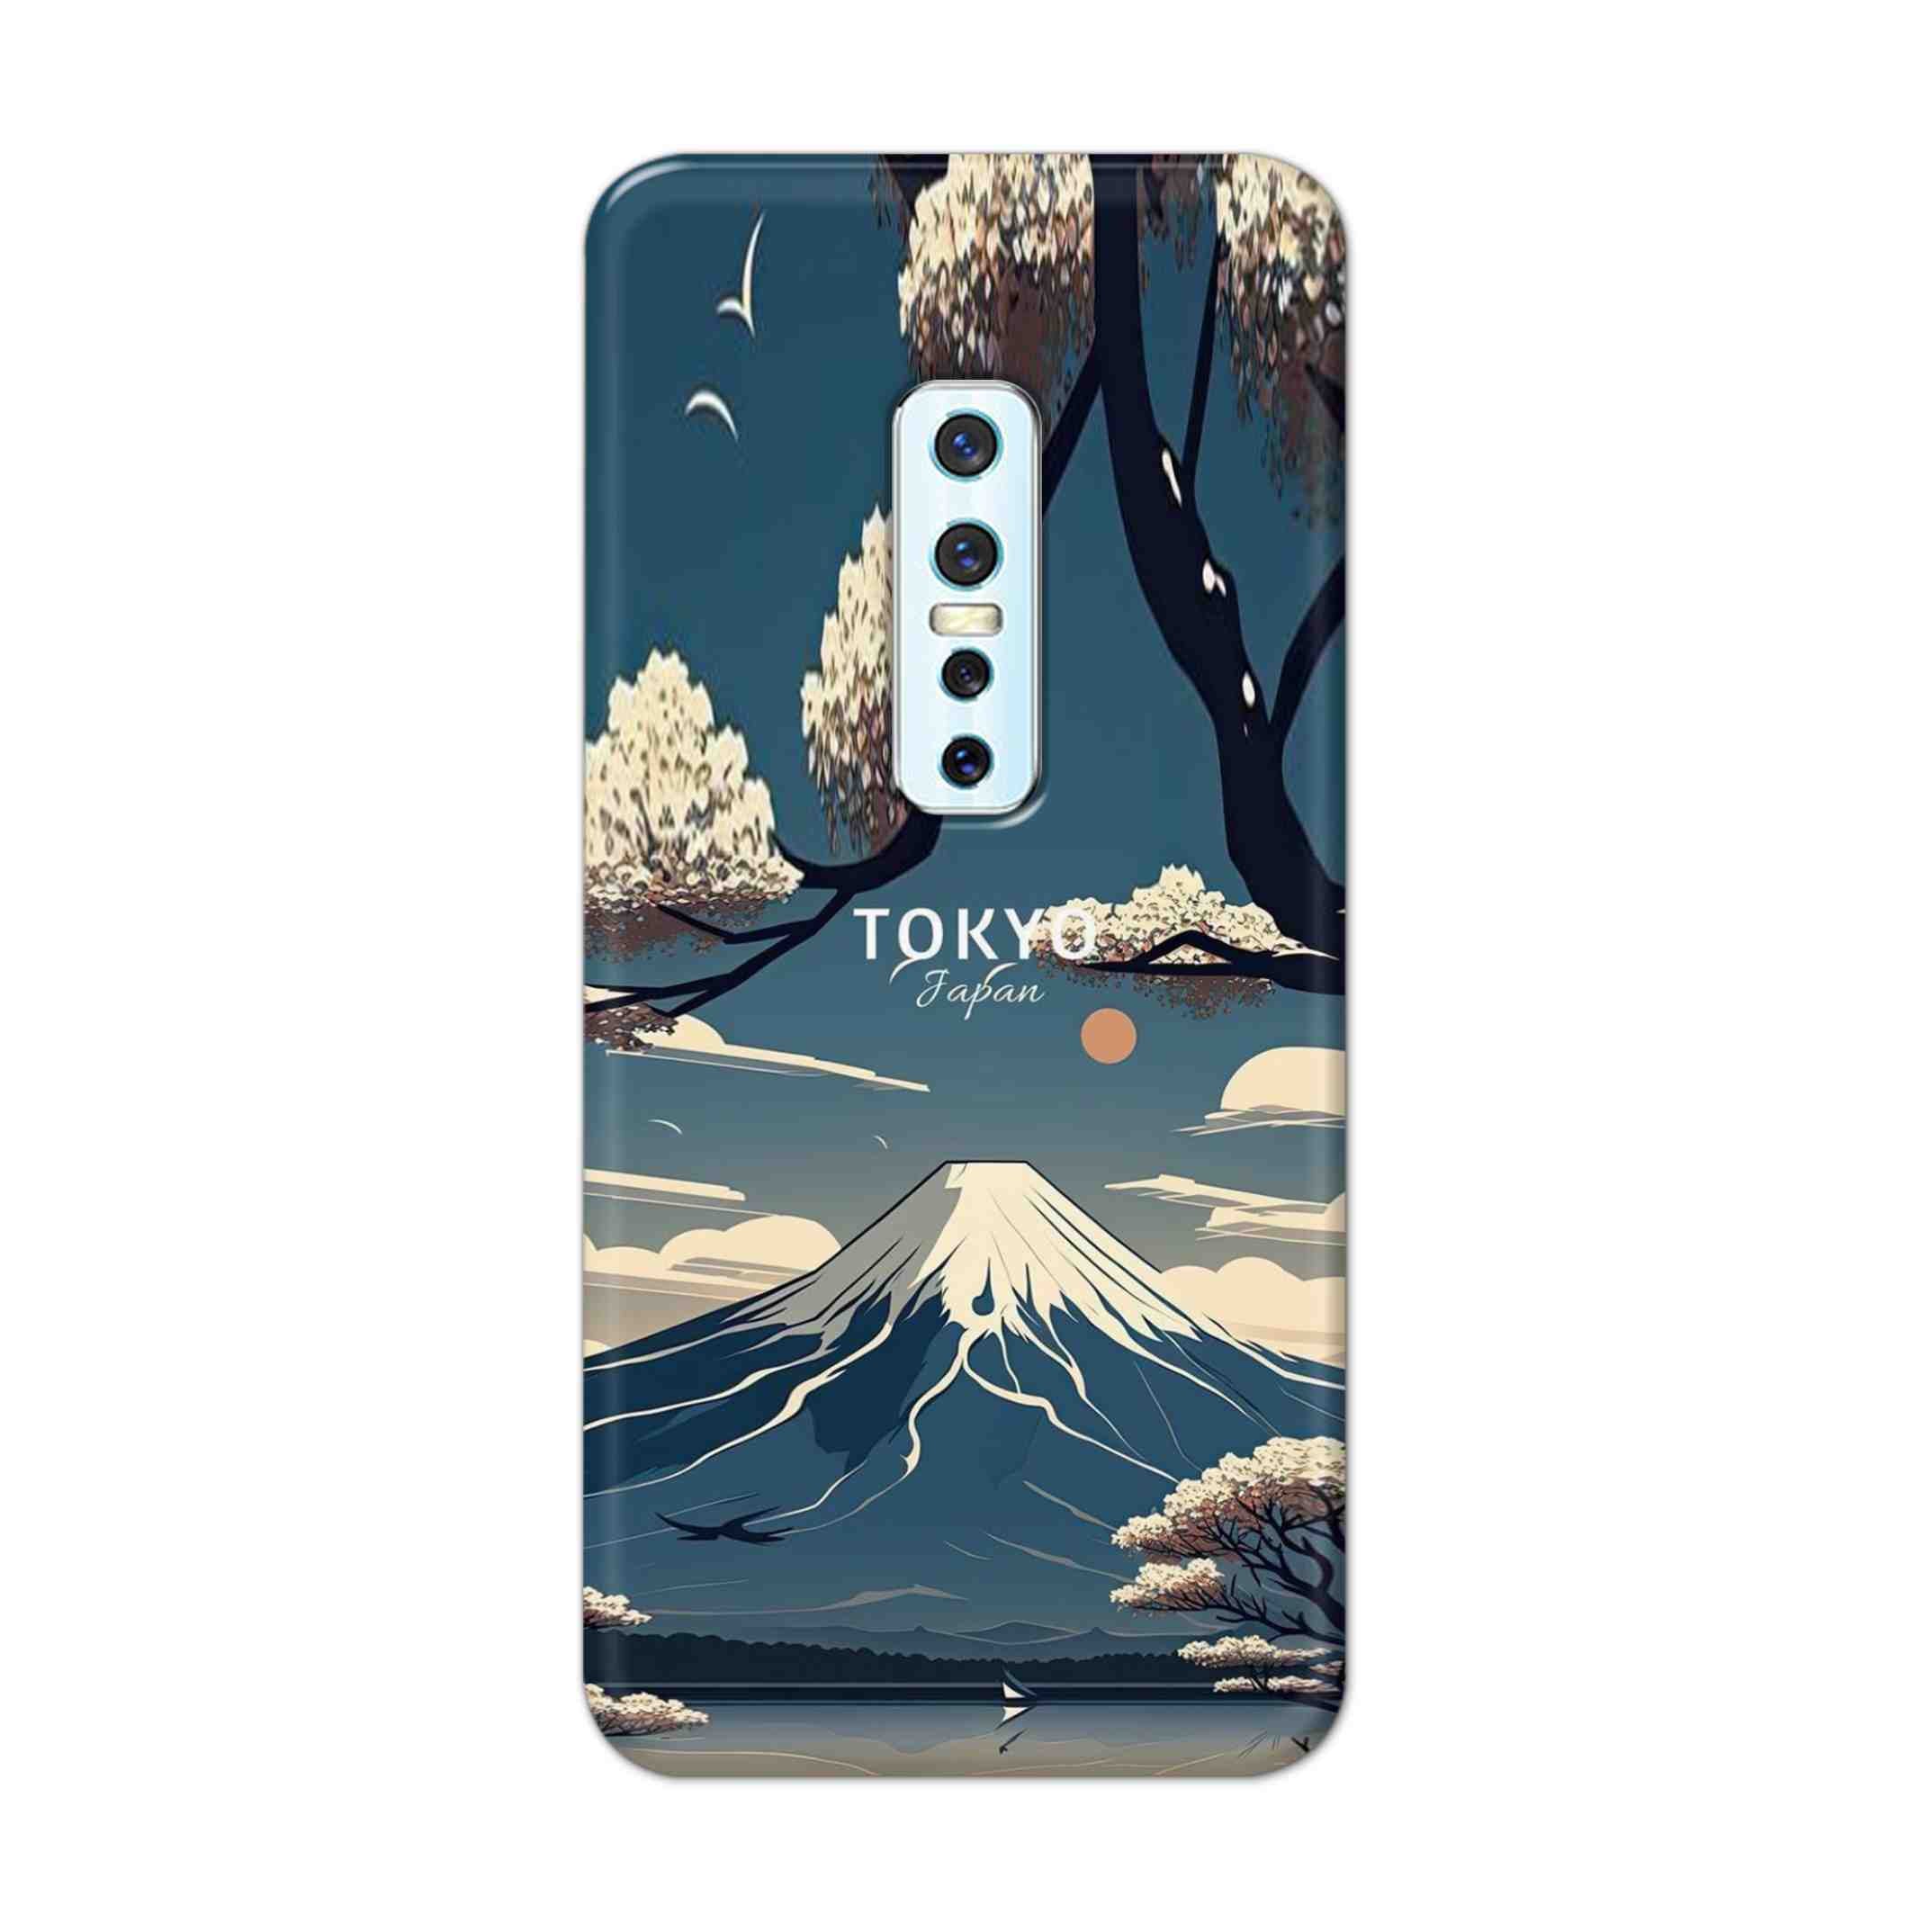 Buy Tokyo Hard Back Mobile Phone Case Cover For Vivo V17 Pro Online